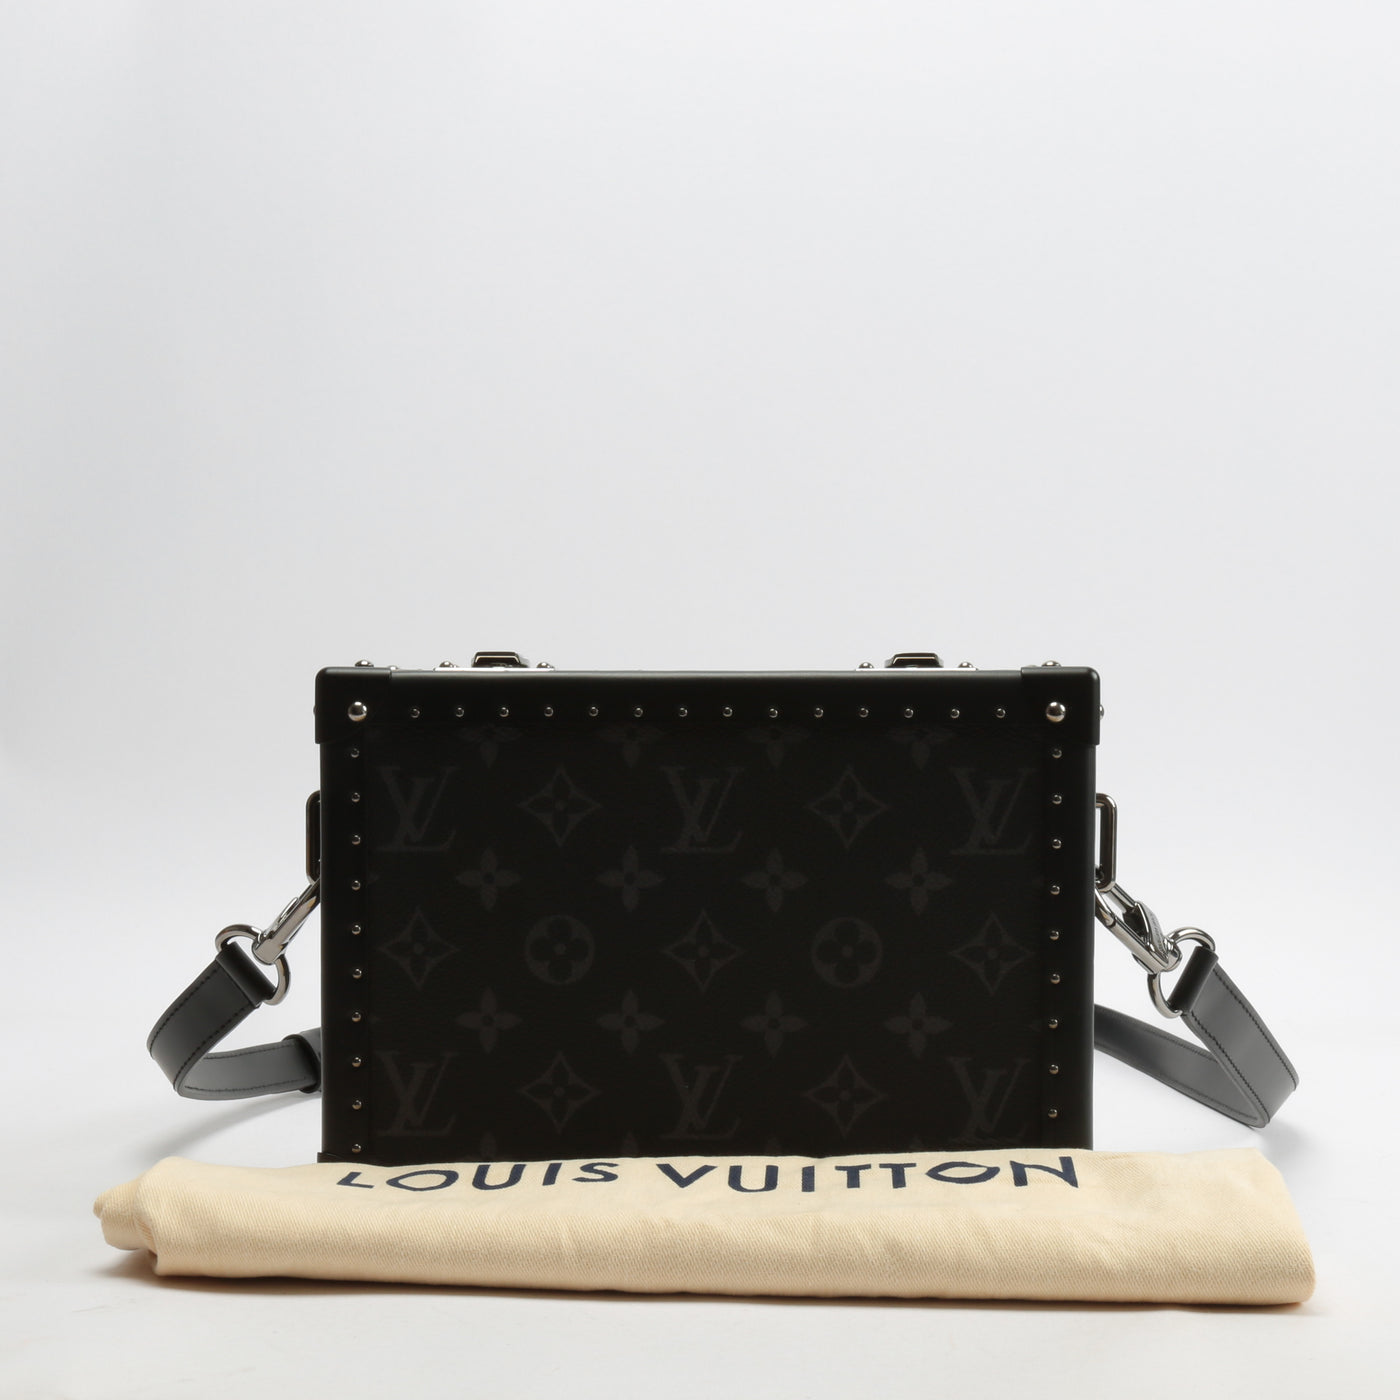 Louis Vuitton Clutch Box Monogram Brown/Black